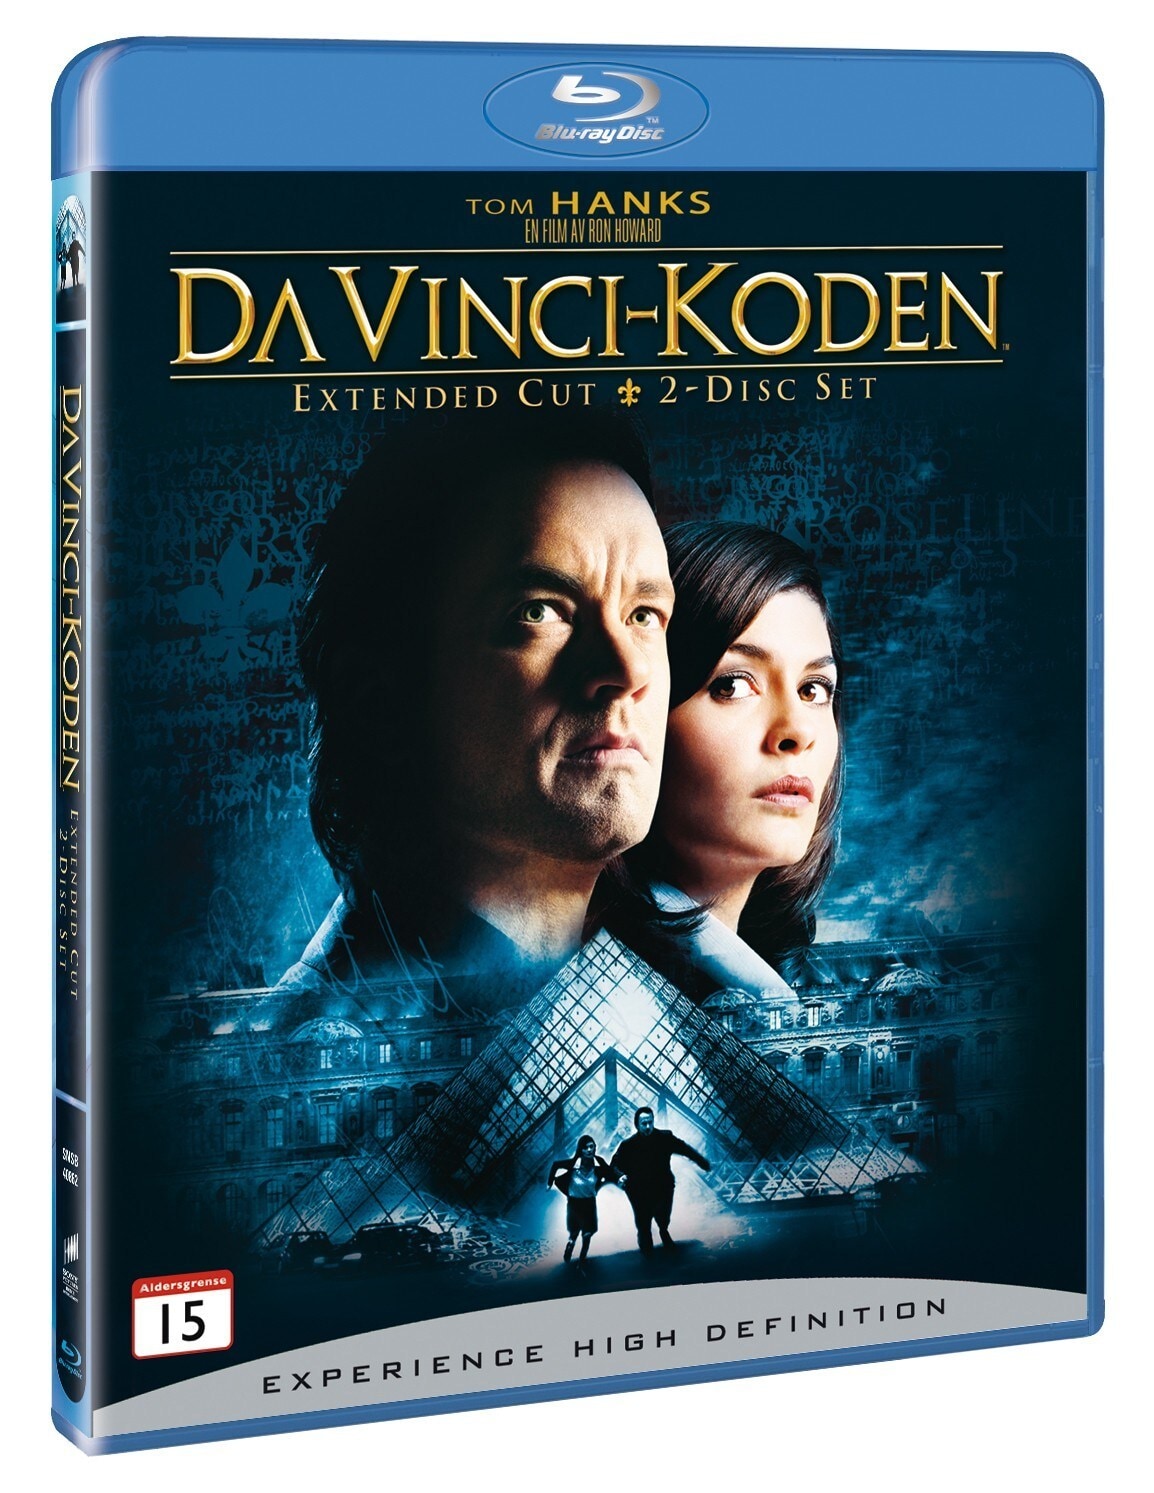 Da Vinci koodi (Blu-ray) - Gigantti verkkokauppa